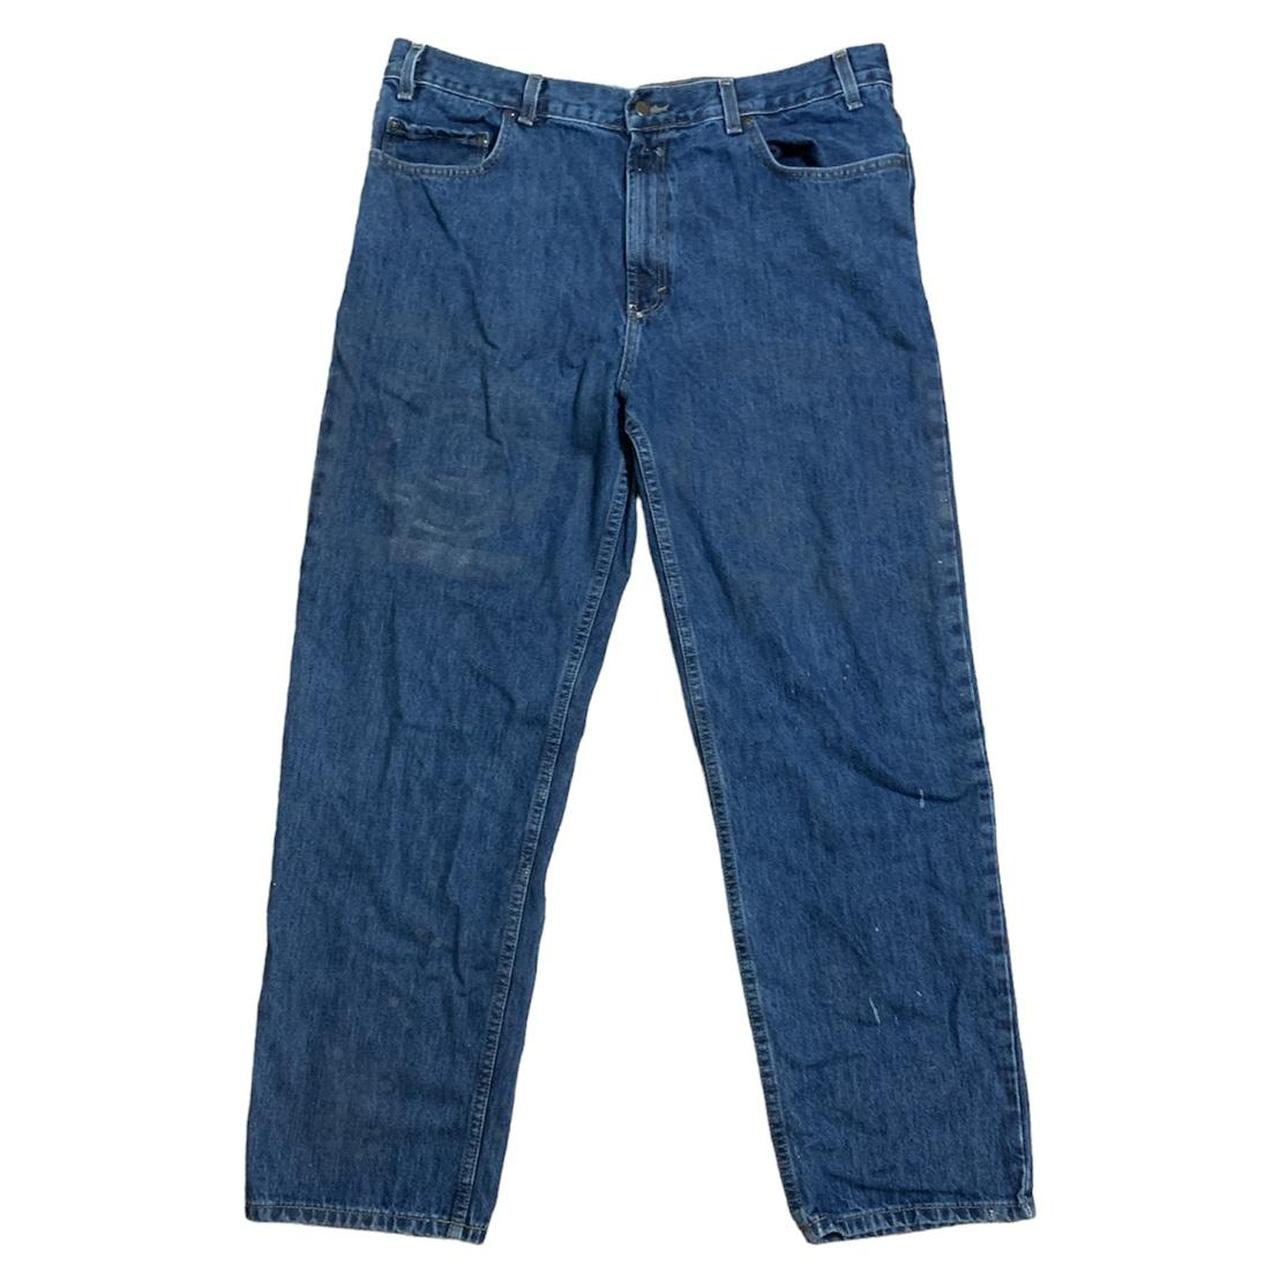 dark blue Kirkland signature jeans paint splatters &... - Depop